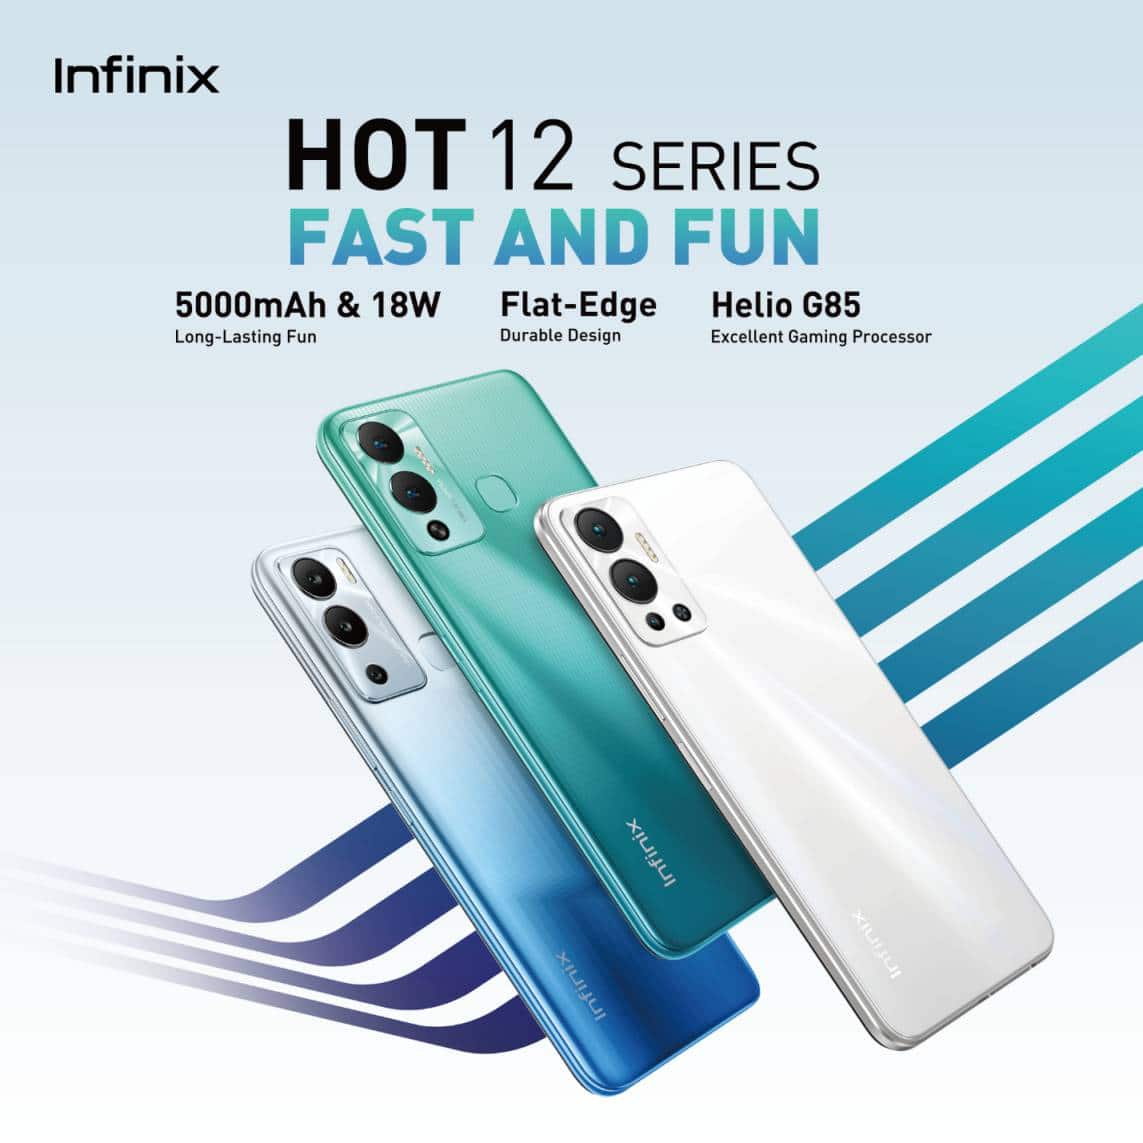 Infinix Launches Fresh & Stylish All-New HOT 12